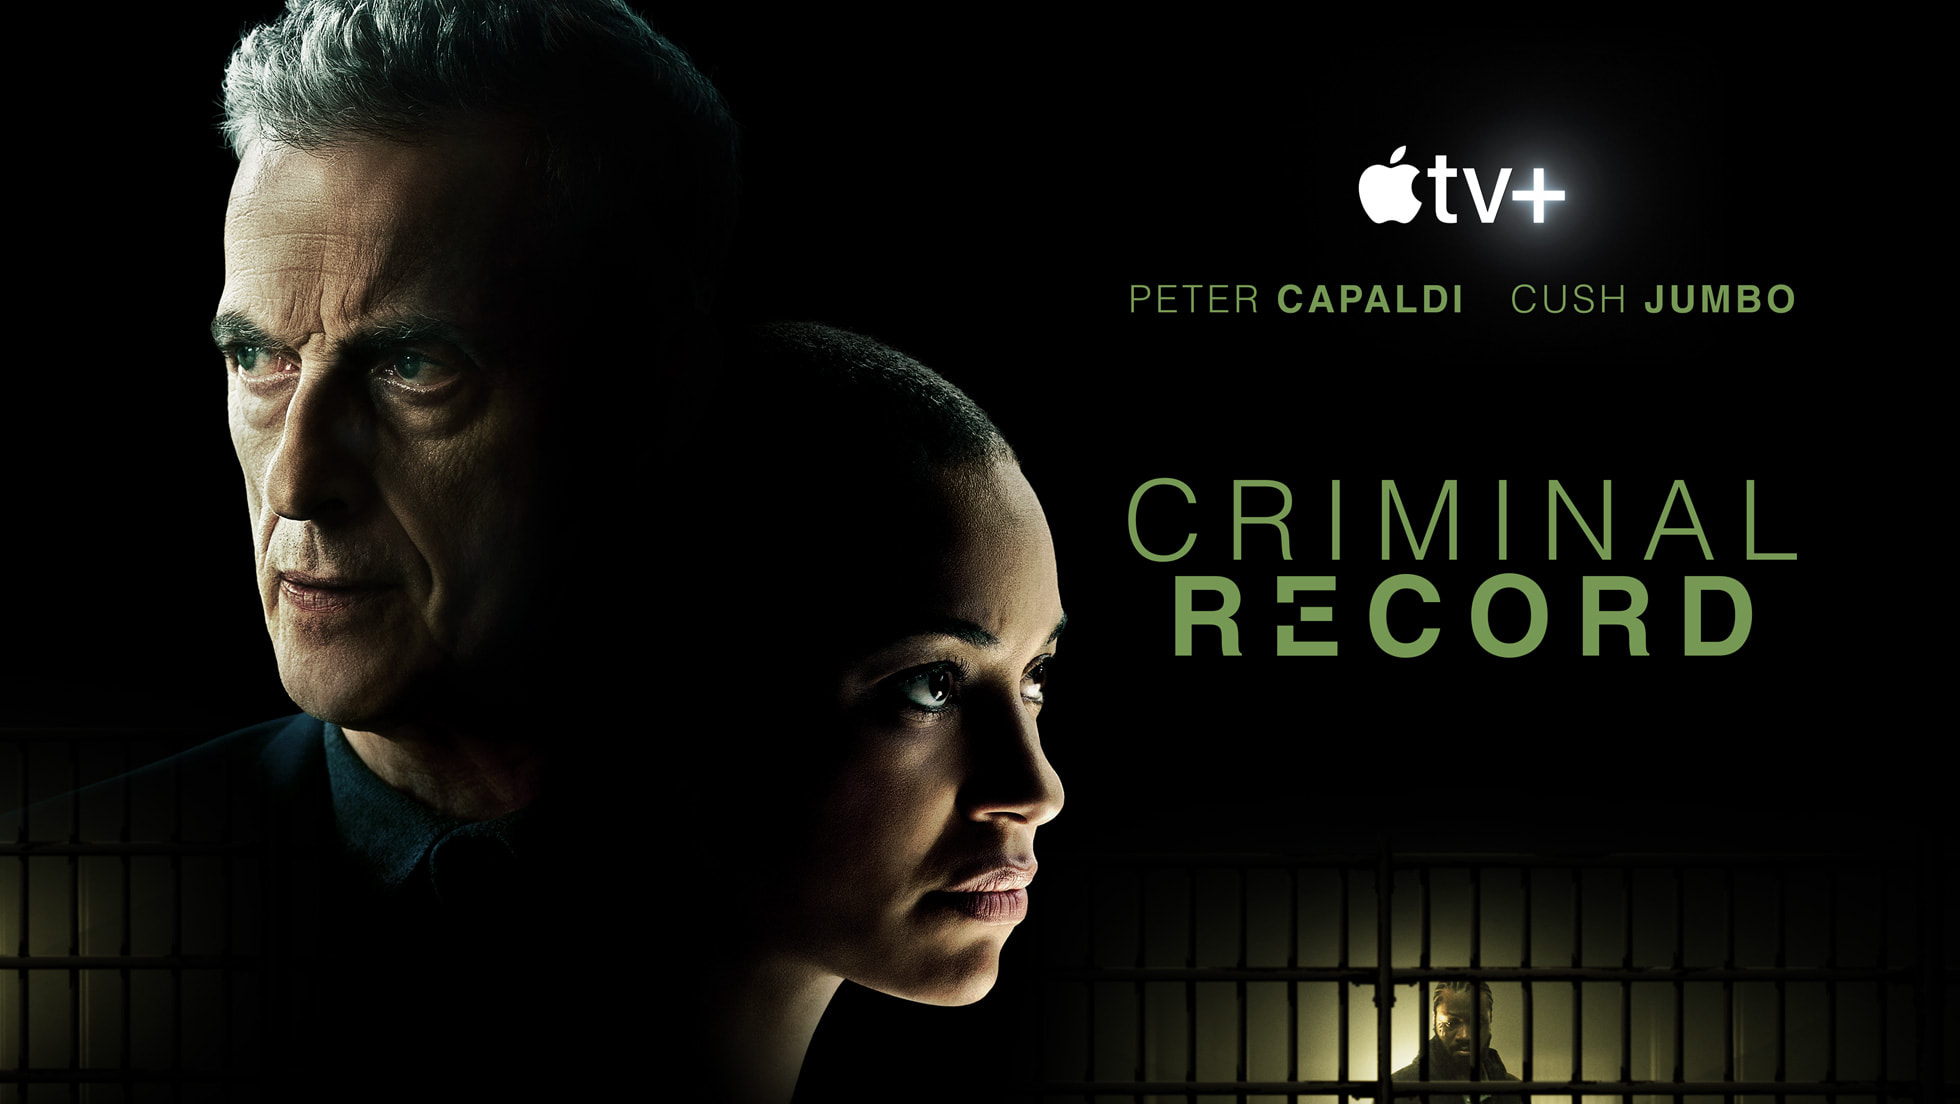 "Criminal Record", A Black TV Show